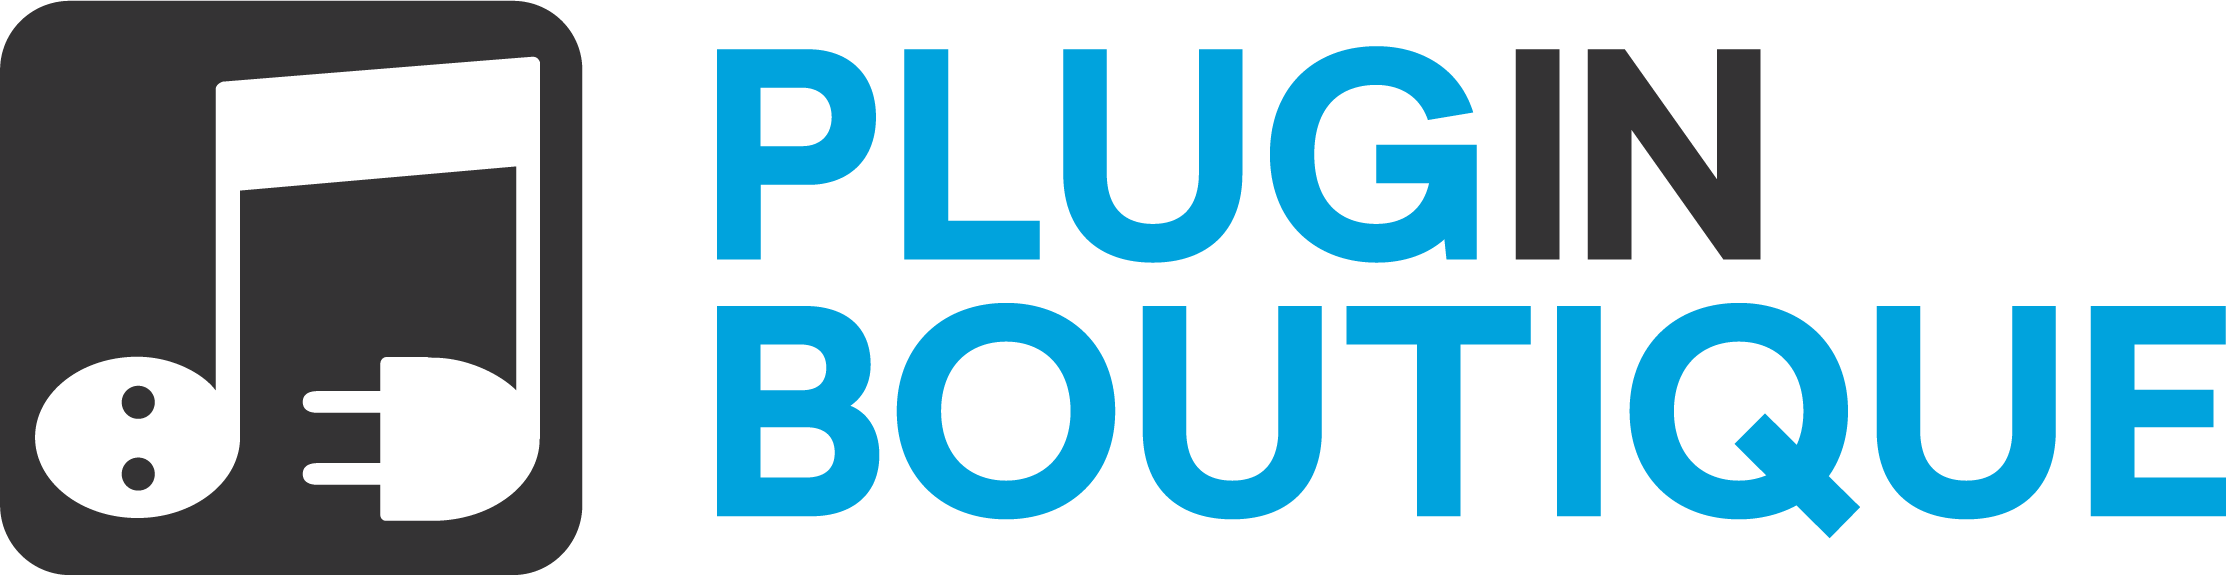 Plugin Boutique Scaler 2+ Bundle Make Music Day Sale (Exclusive) – 21% Off